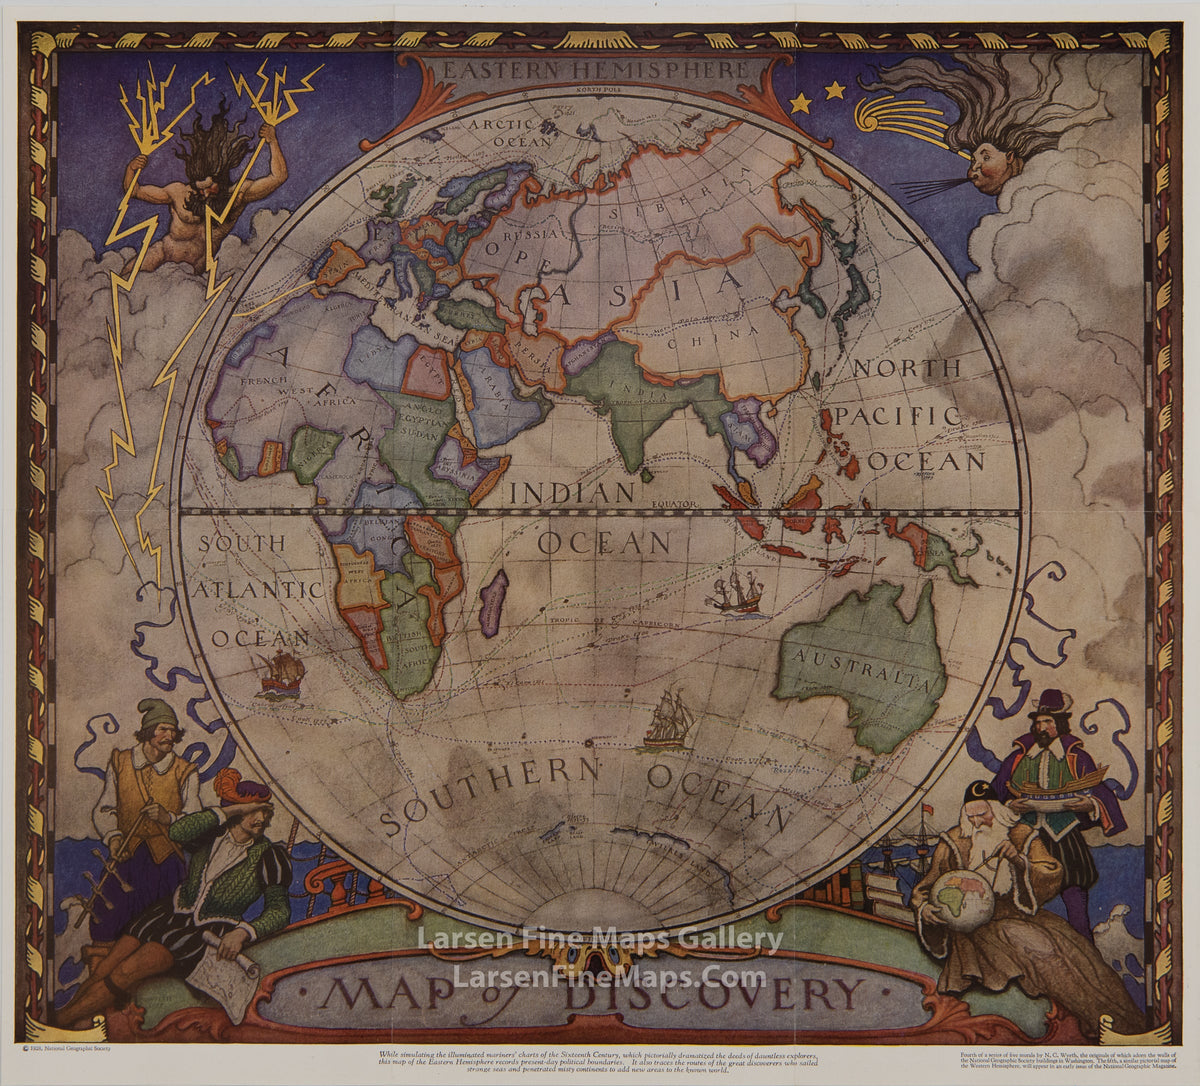 Eastern Hemisphere Map of Discovery